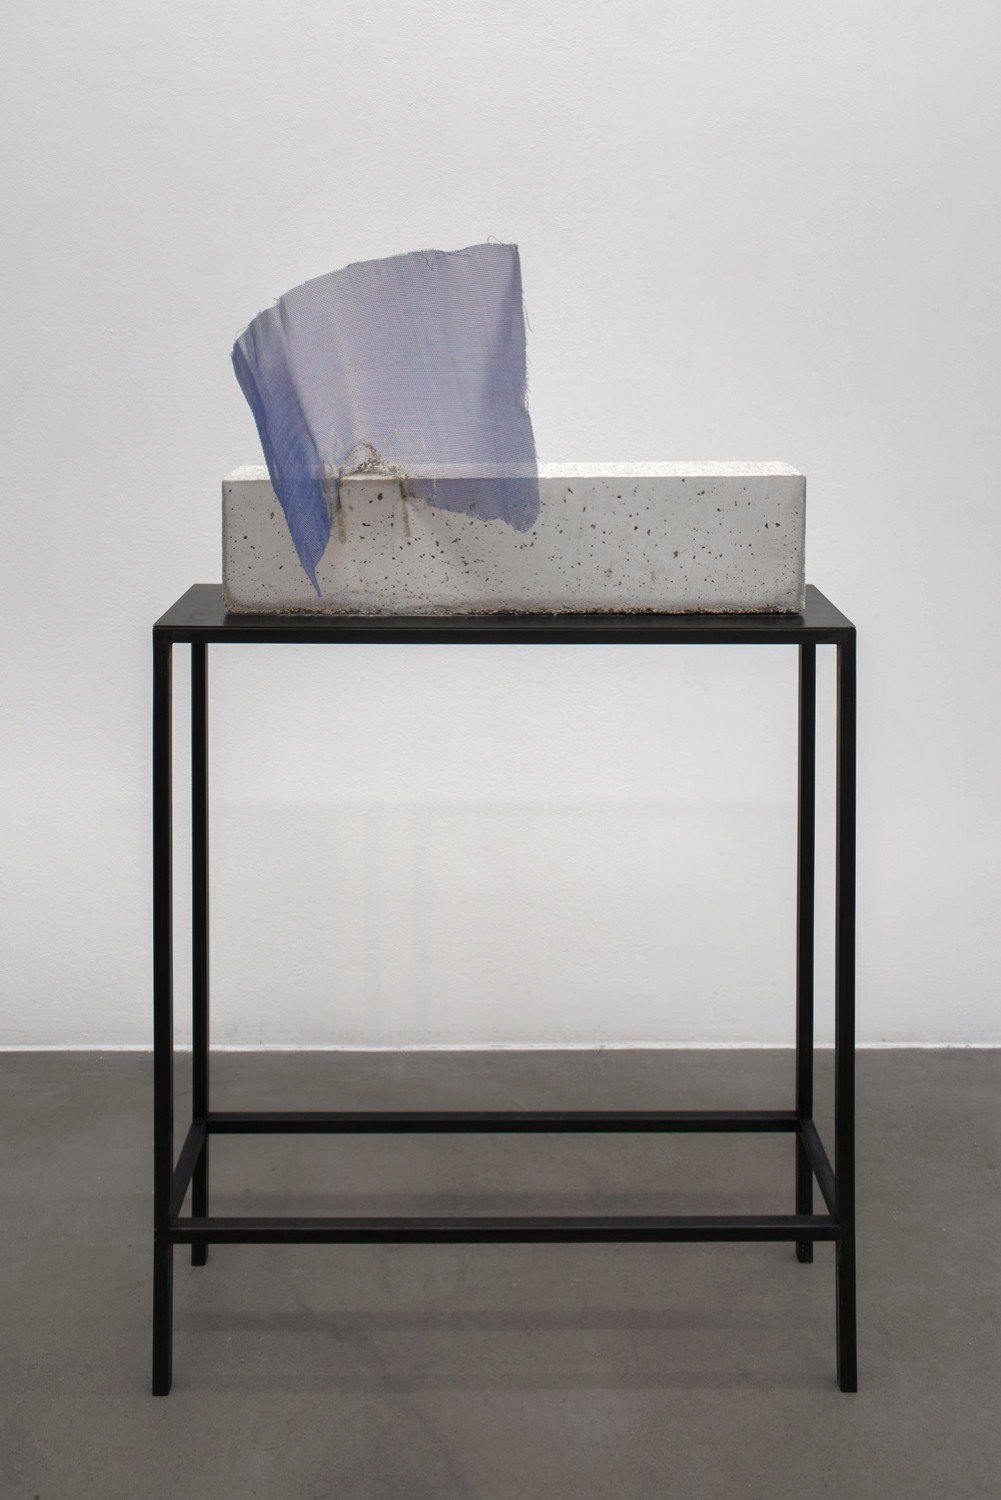 Andy BootHeartland (CASA DE DAVI) 1, 2014Concrete, UV-print on metal mesh, metal142 x 86 x 21 cm